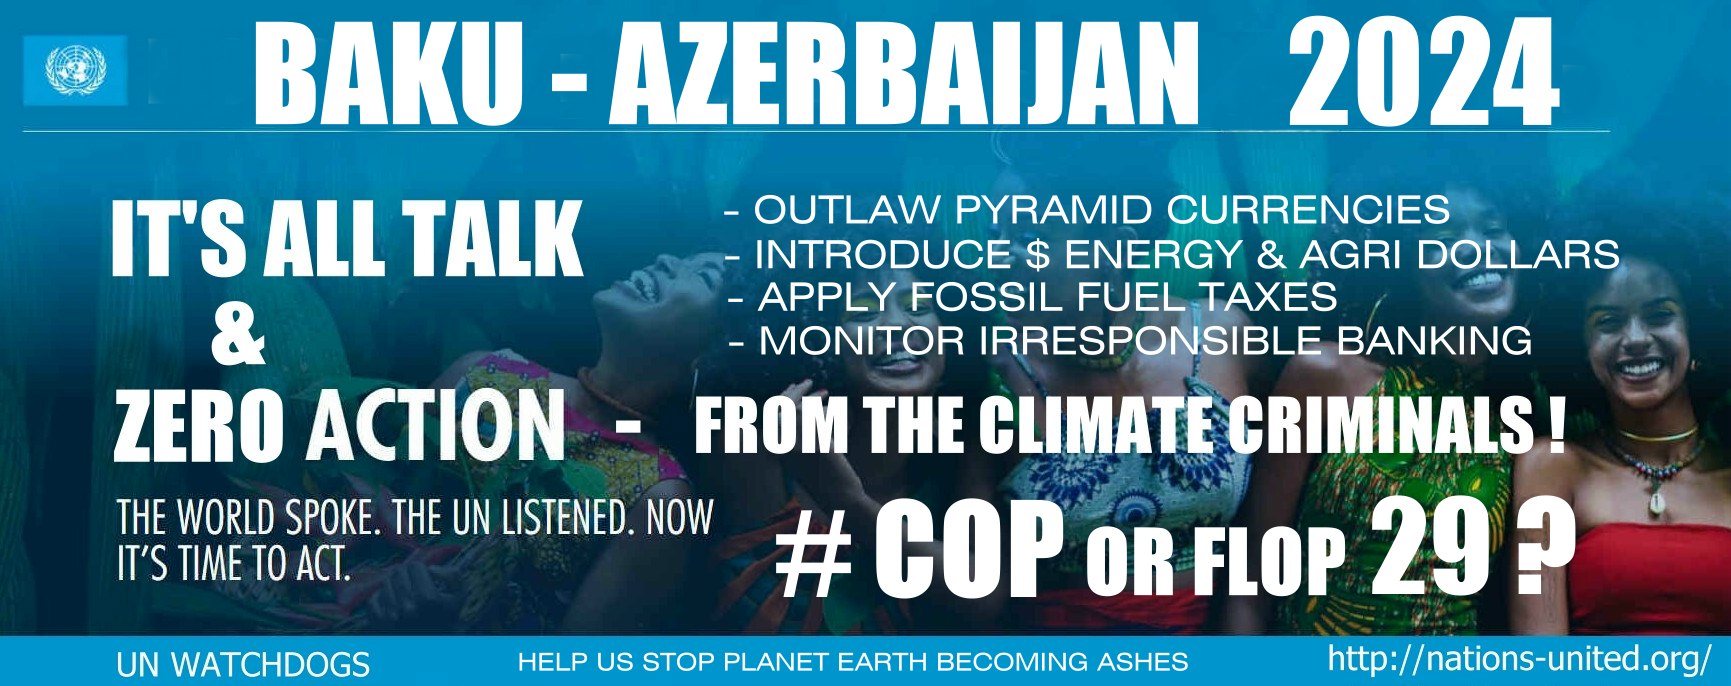 Baku, Azerbaijan is the venue for COP29, facing into the Caspian Sea